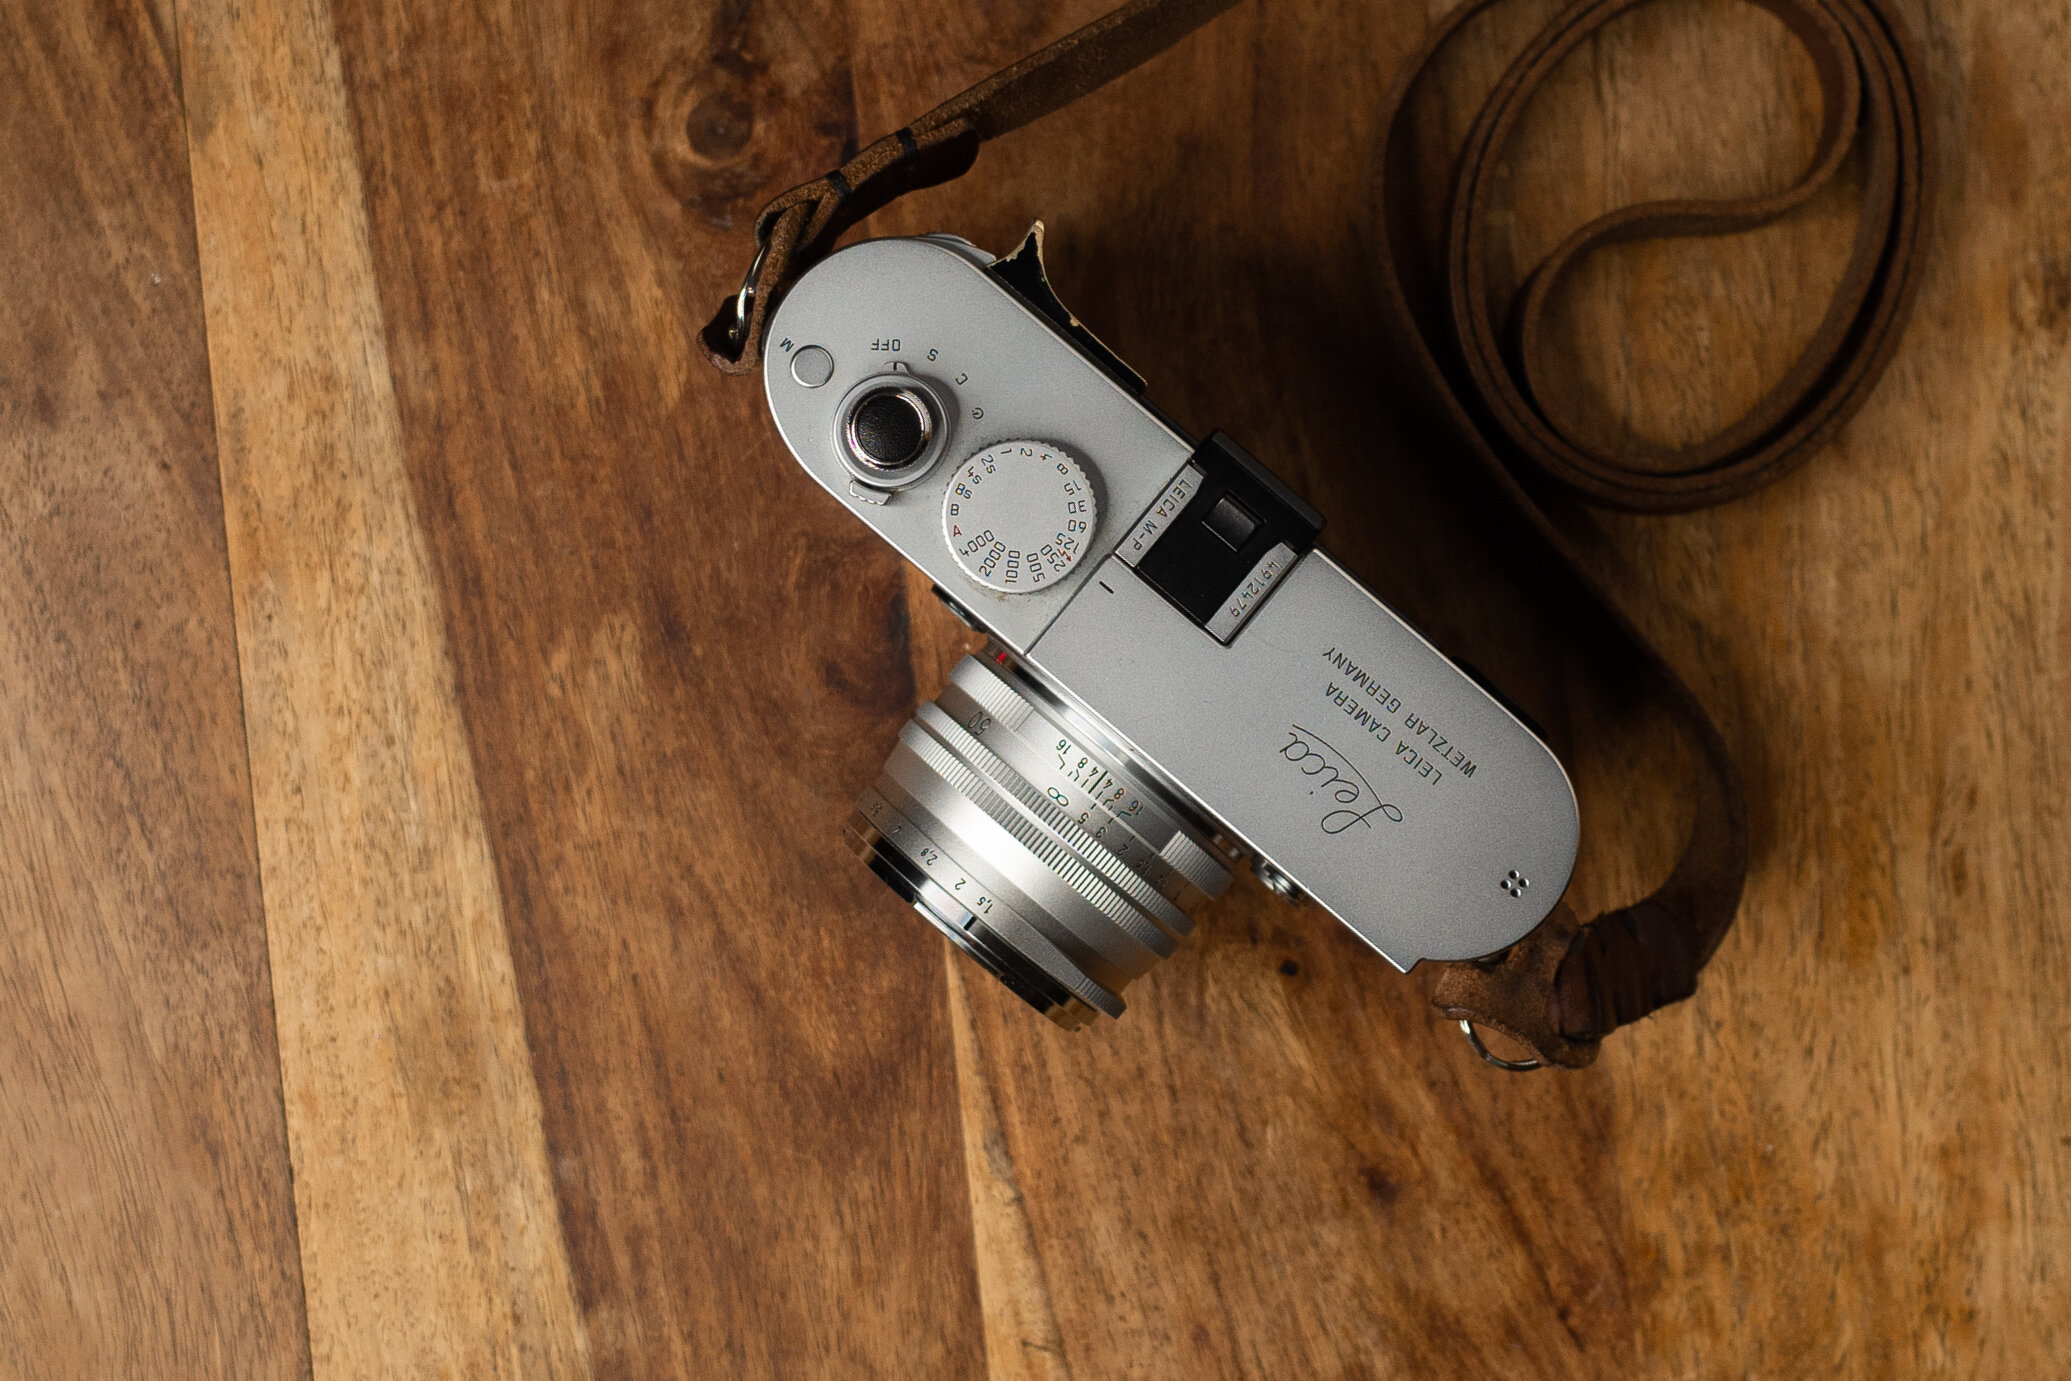 Voigtlander Nokton 50mm 1.5 II review — Focus shift: a street